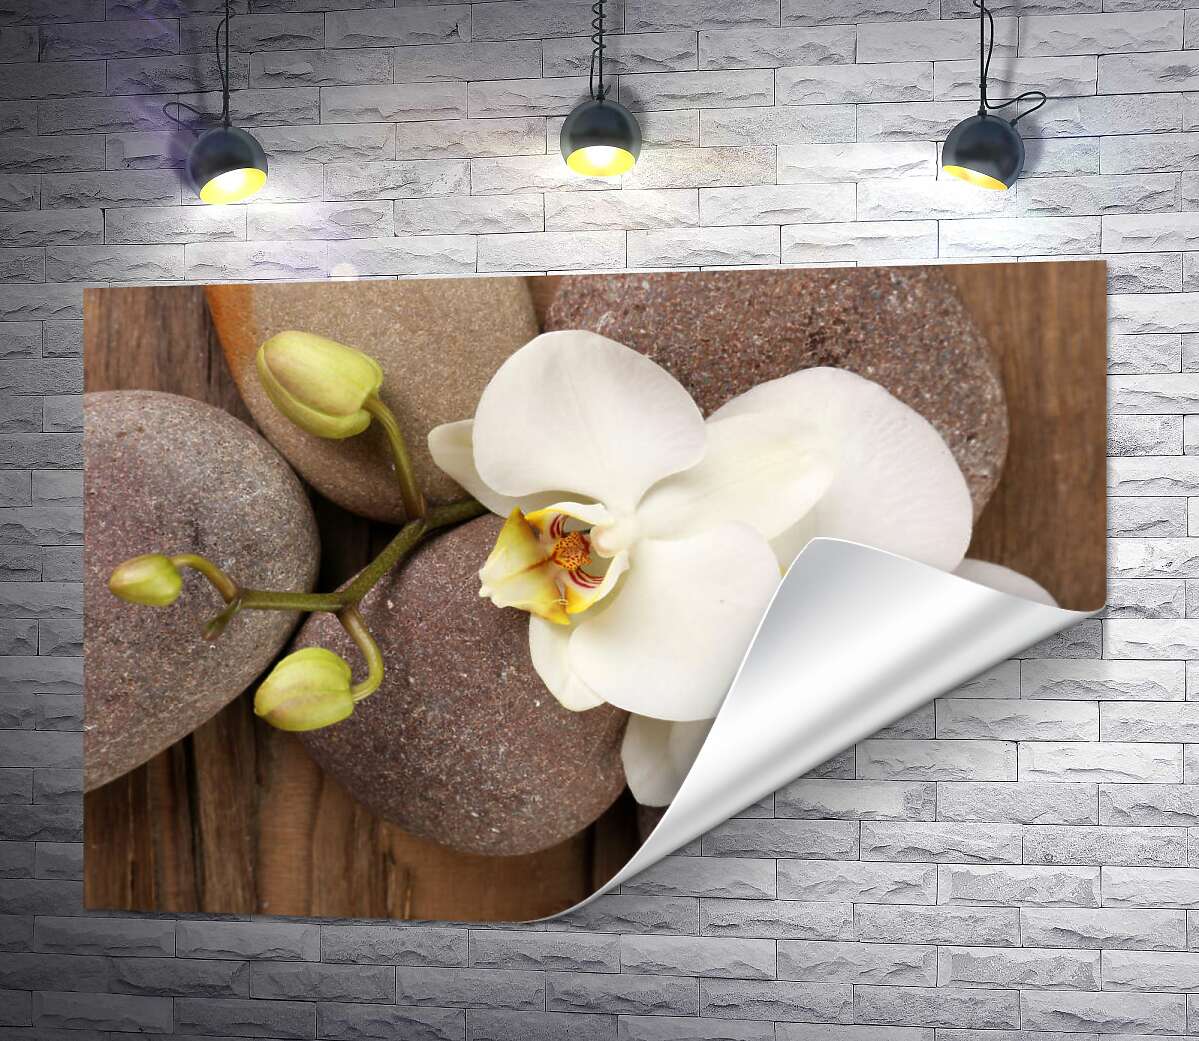 друк Витончена гілка орхідеї лежить на гладеньких каменях